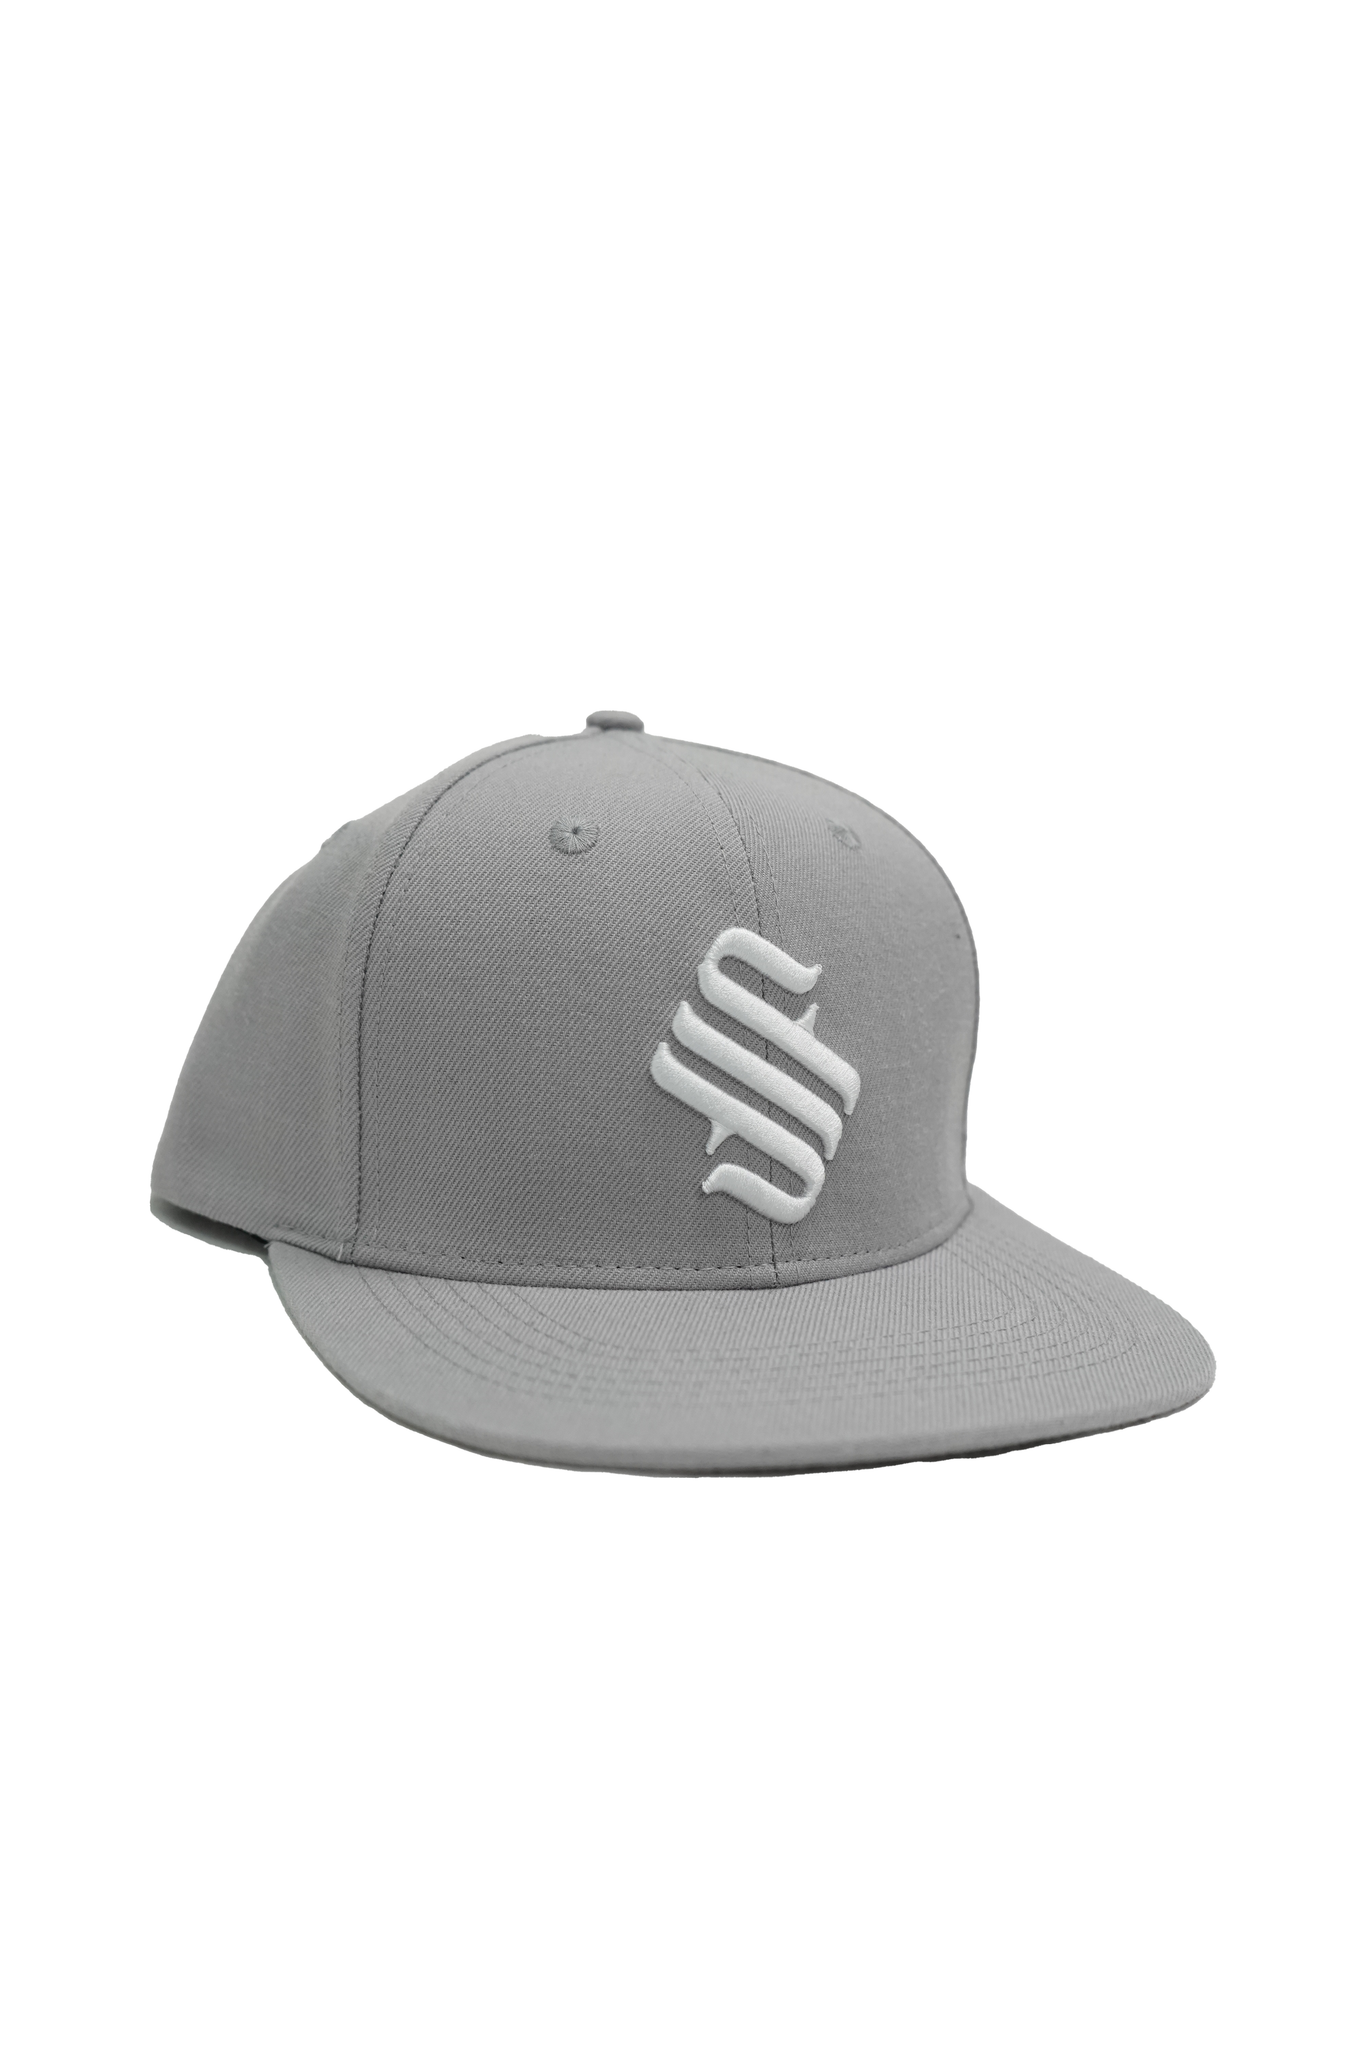 New Logo Snapback Hat - Grey